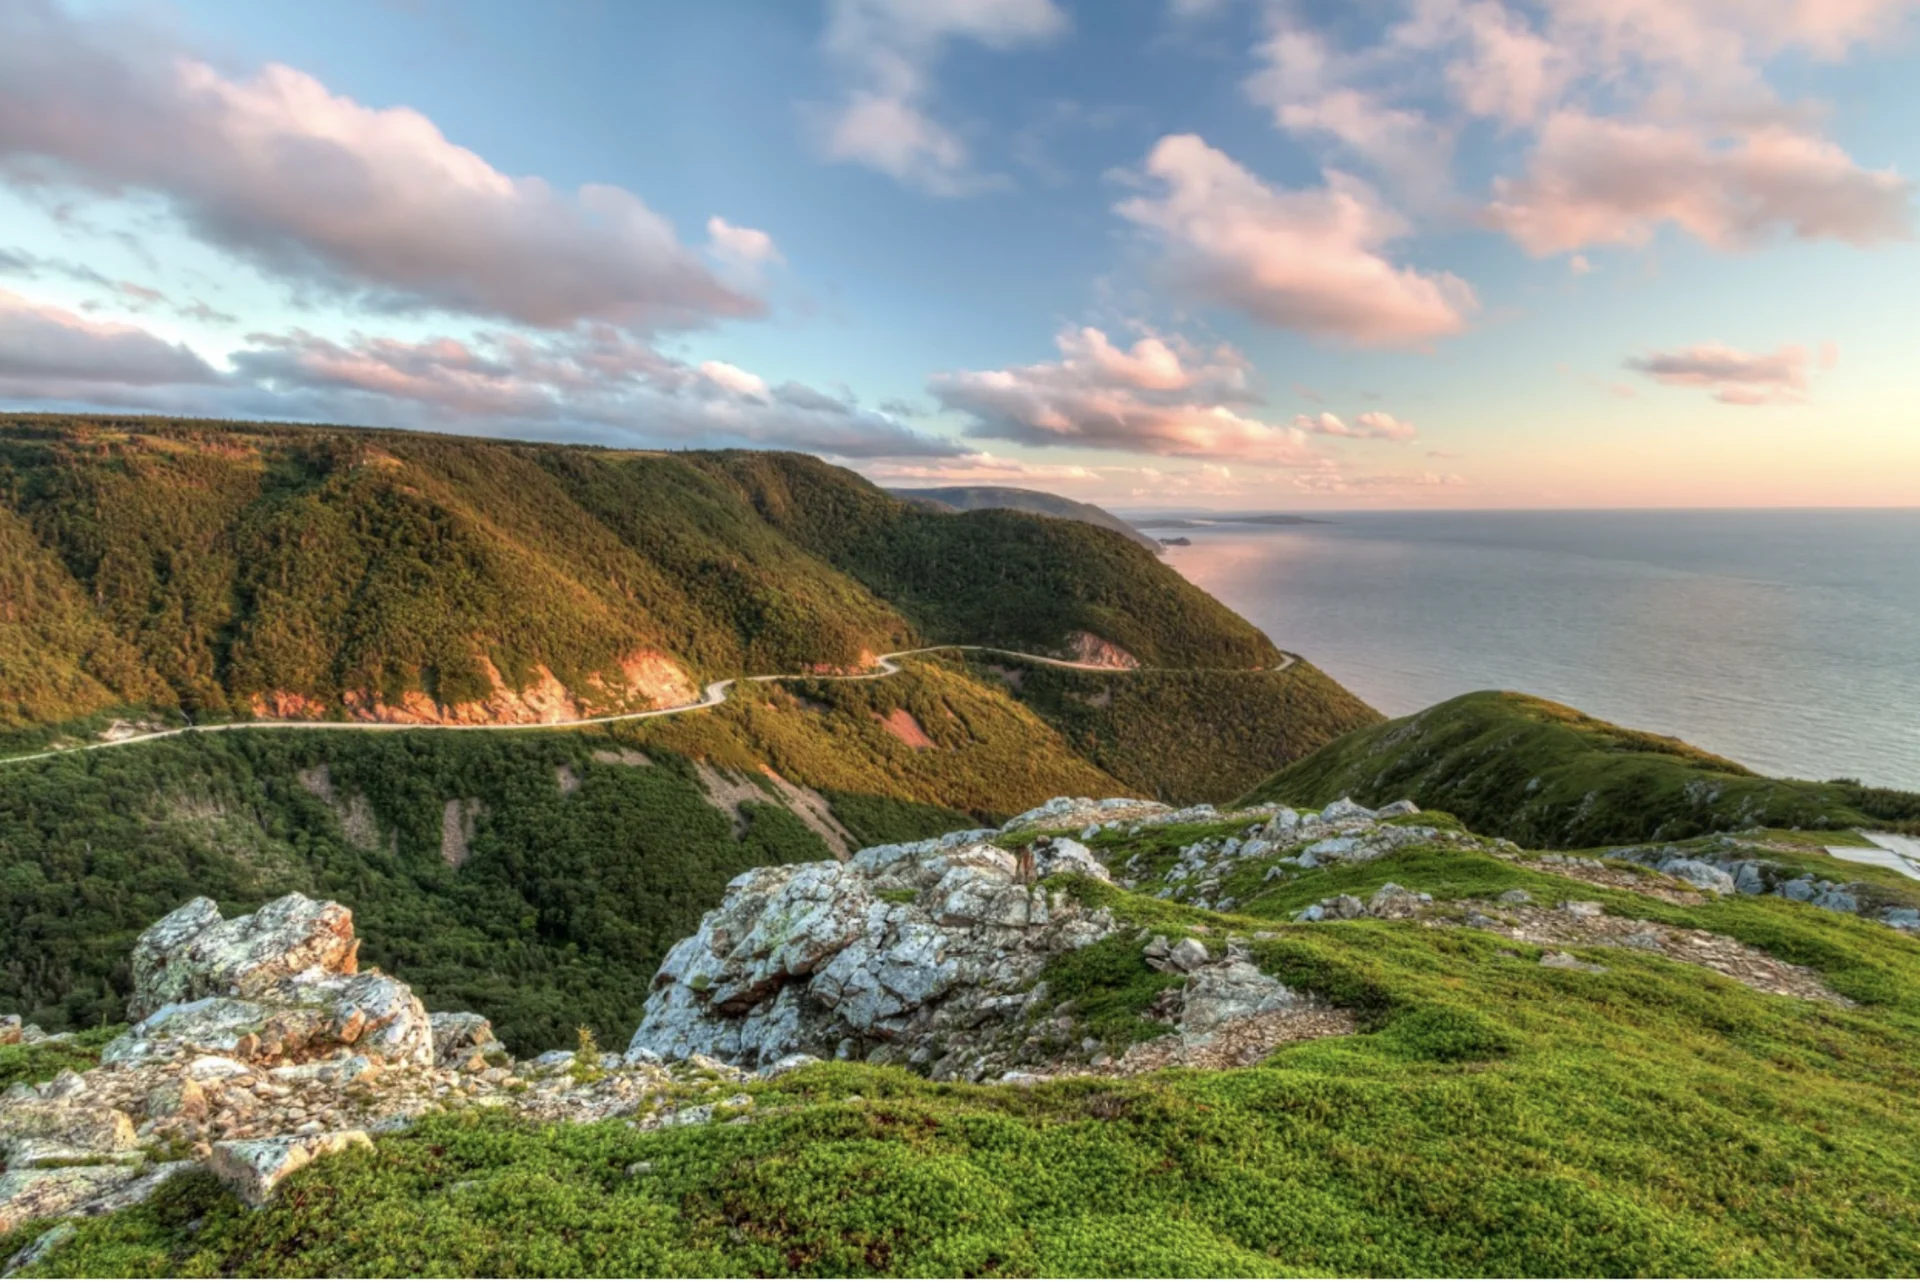 Explore the Rolling Hills of the East Coast: Cape Breton awaits